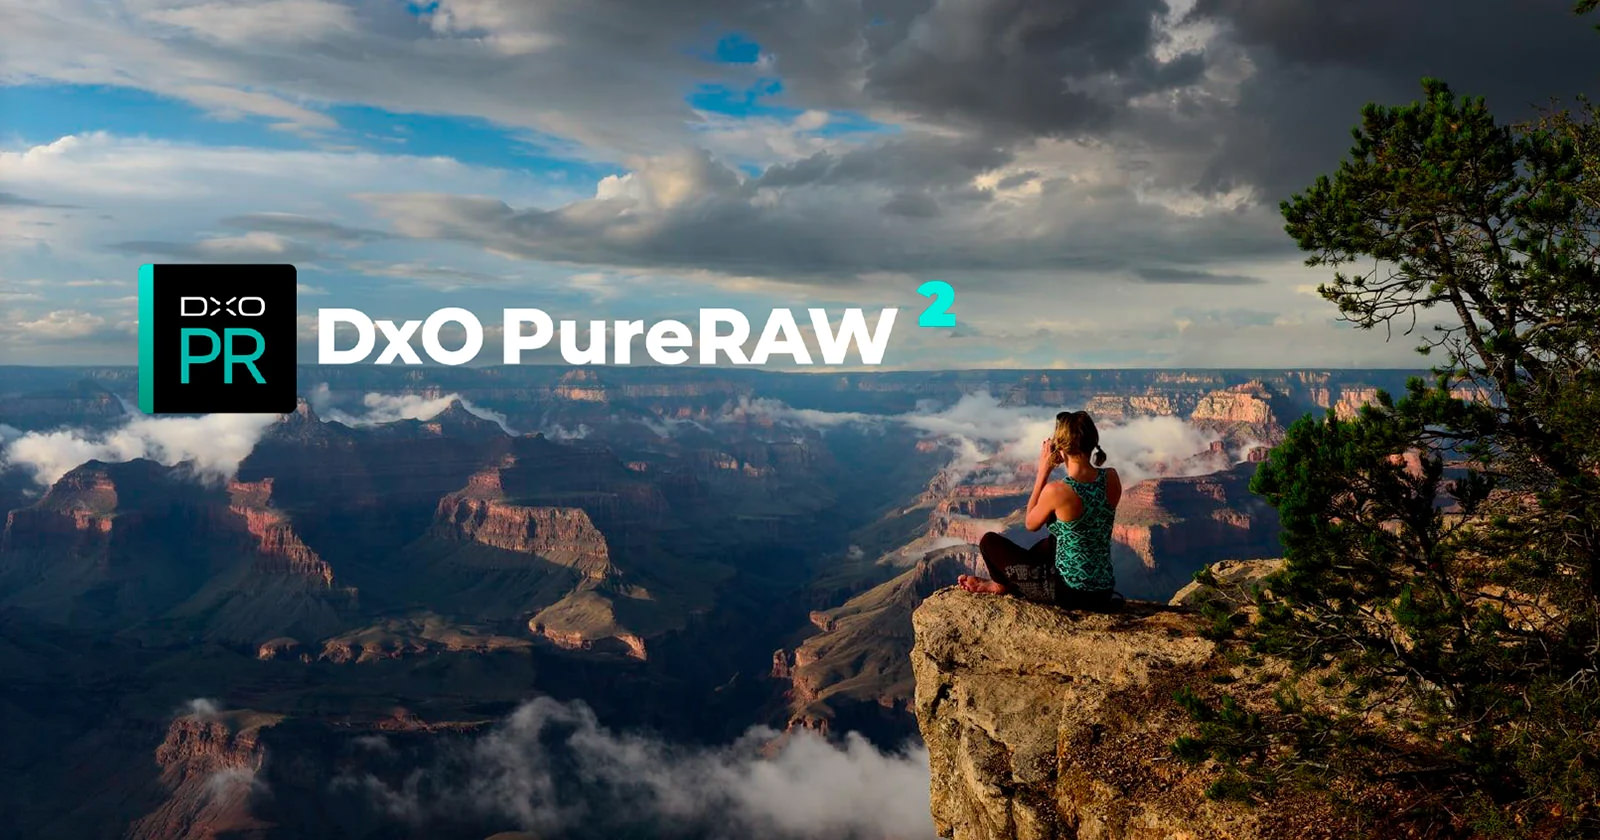 DxO PureRAW 2 Released - Exibart Street